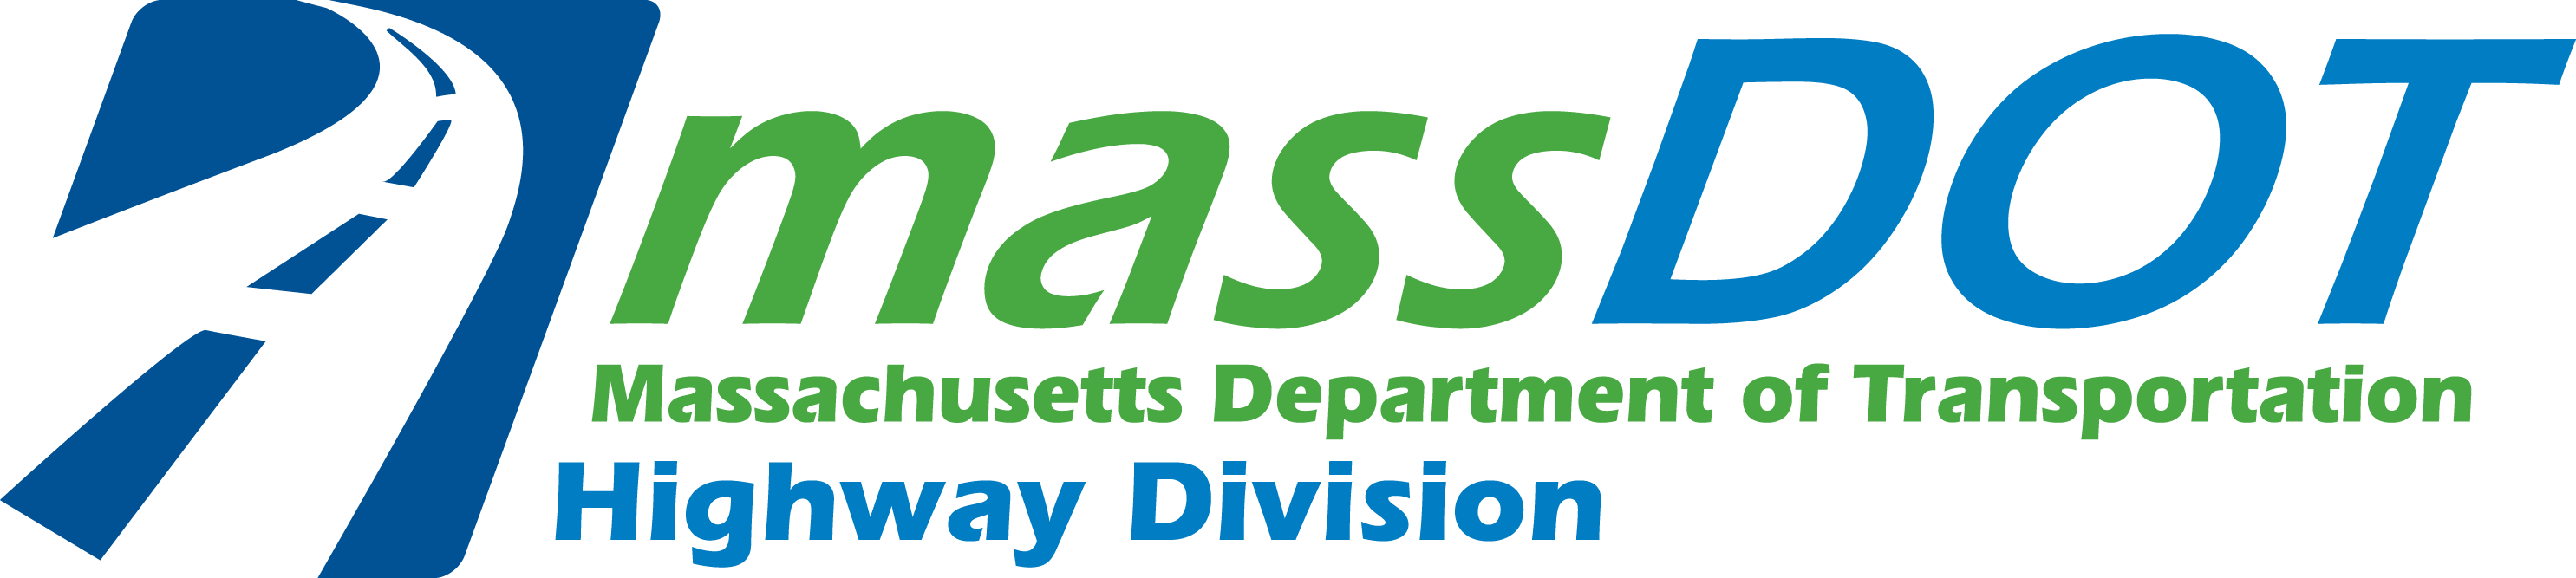 massDOT logo: Massachusetts Department of Transportation Highway Division